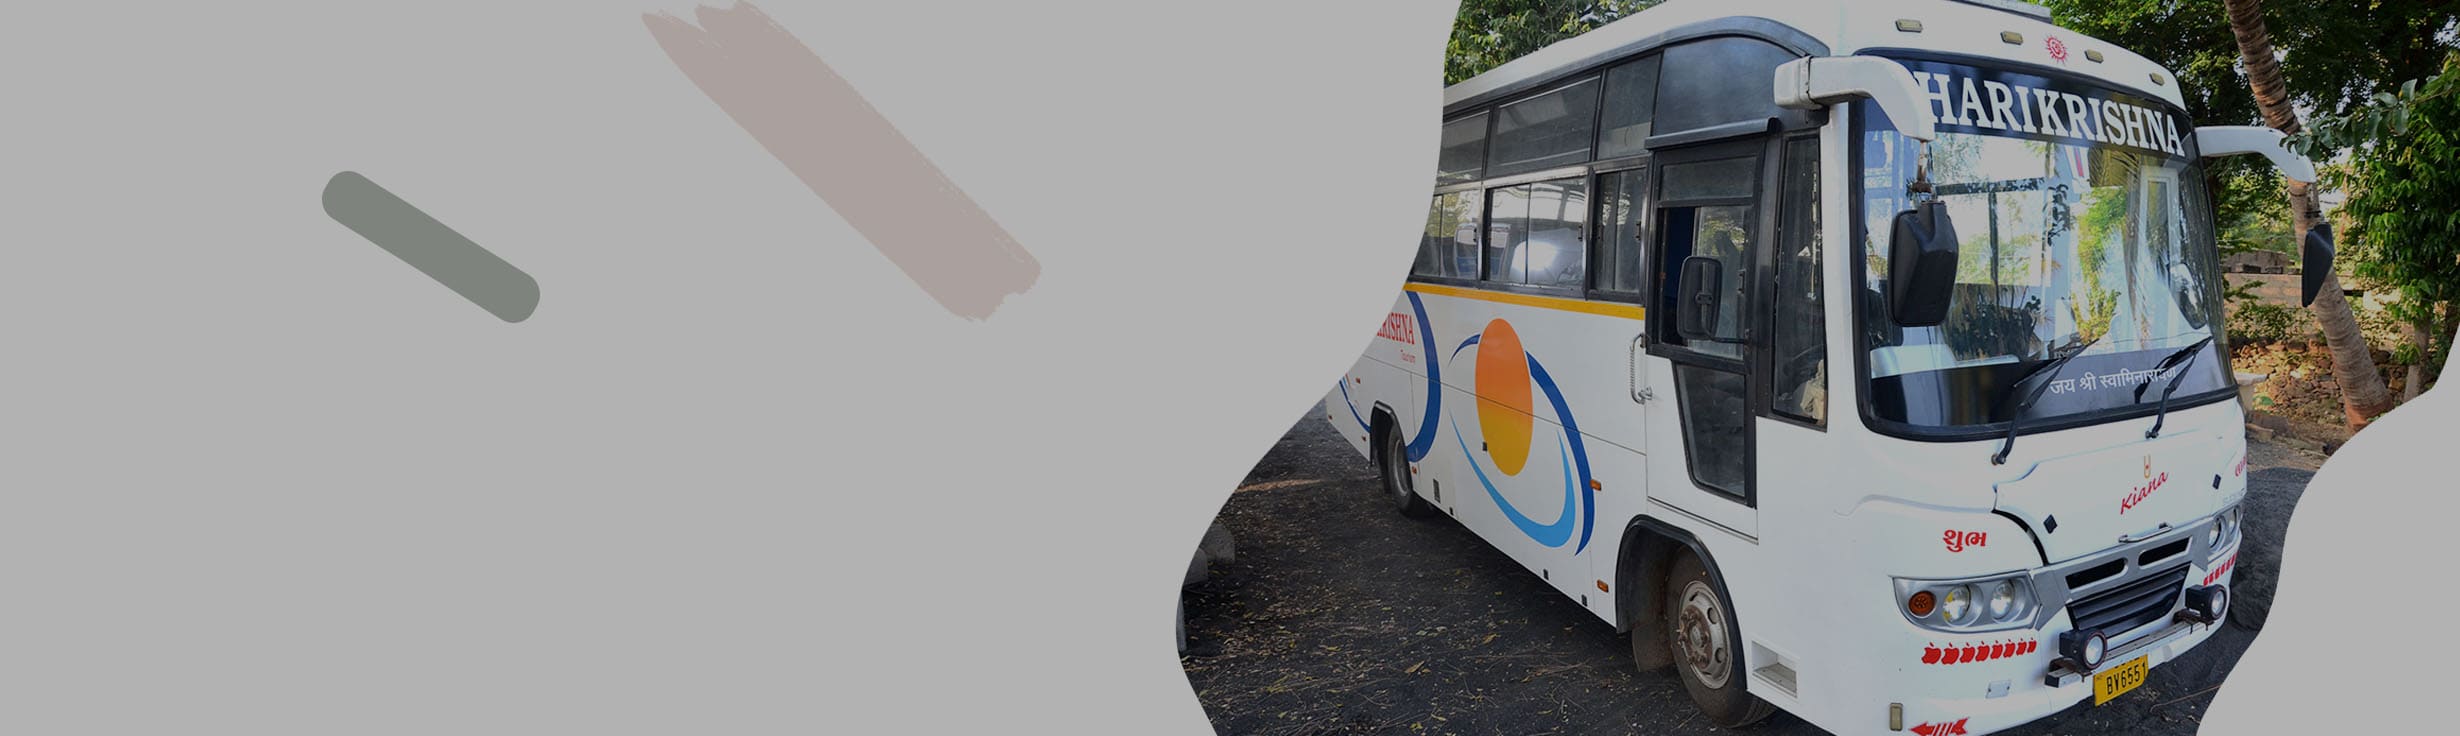 Seating Minibus for Char dham Yatra in Mundra